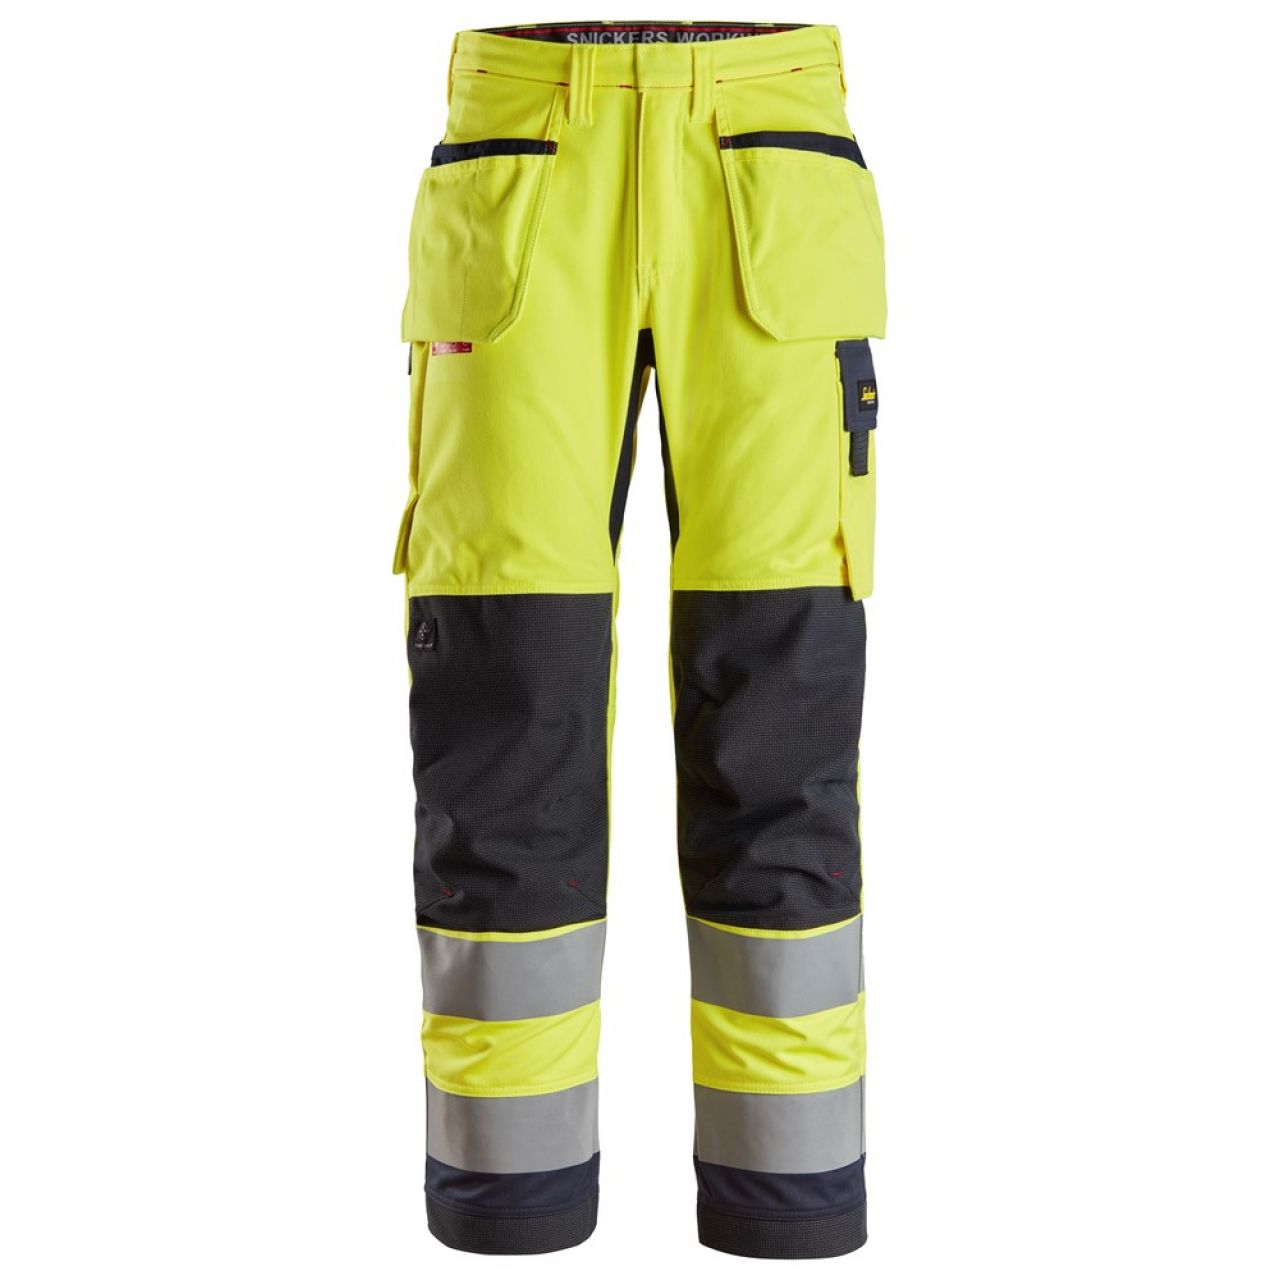 6260 Pantalones largos de trabajo de alta visibilidad clase 2 con bolsillos flotantes ProtecWork amarillo-azul marino talla 150